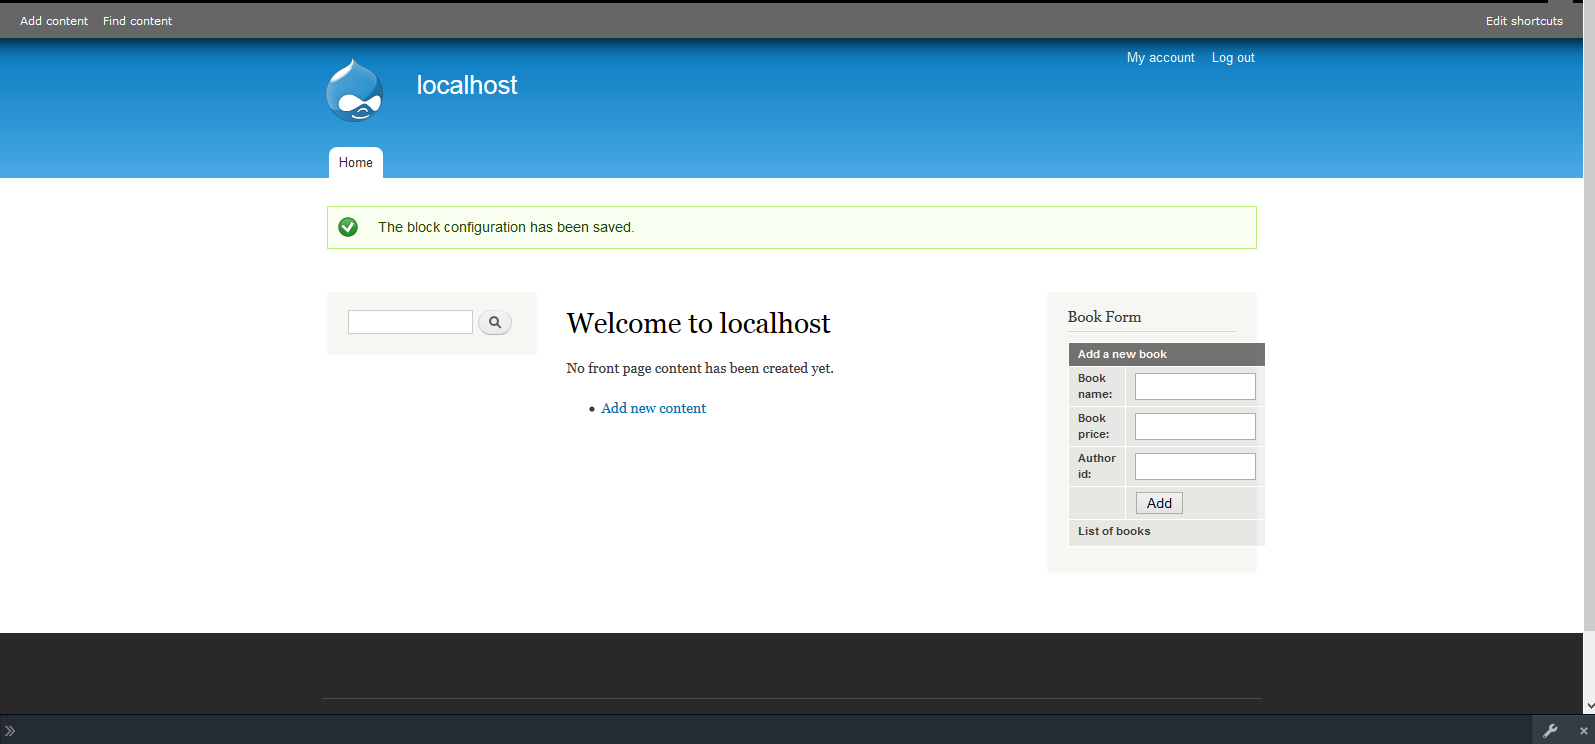 Iex new object net webclient. Webclient. REQUESTFULLSCREEN js пример. JC-webclient. Welcome localhost Page.